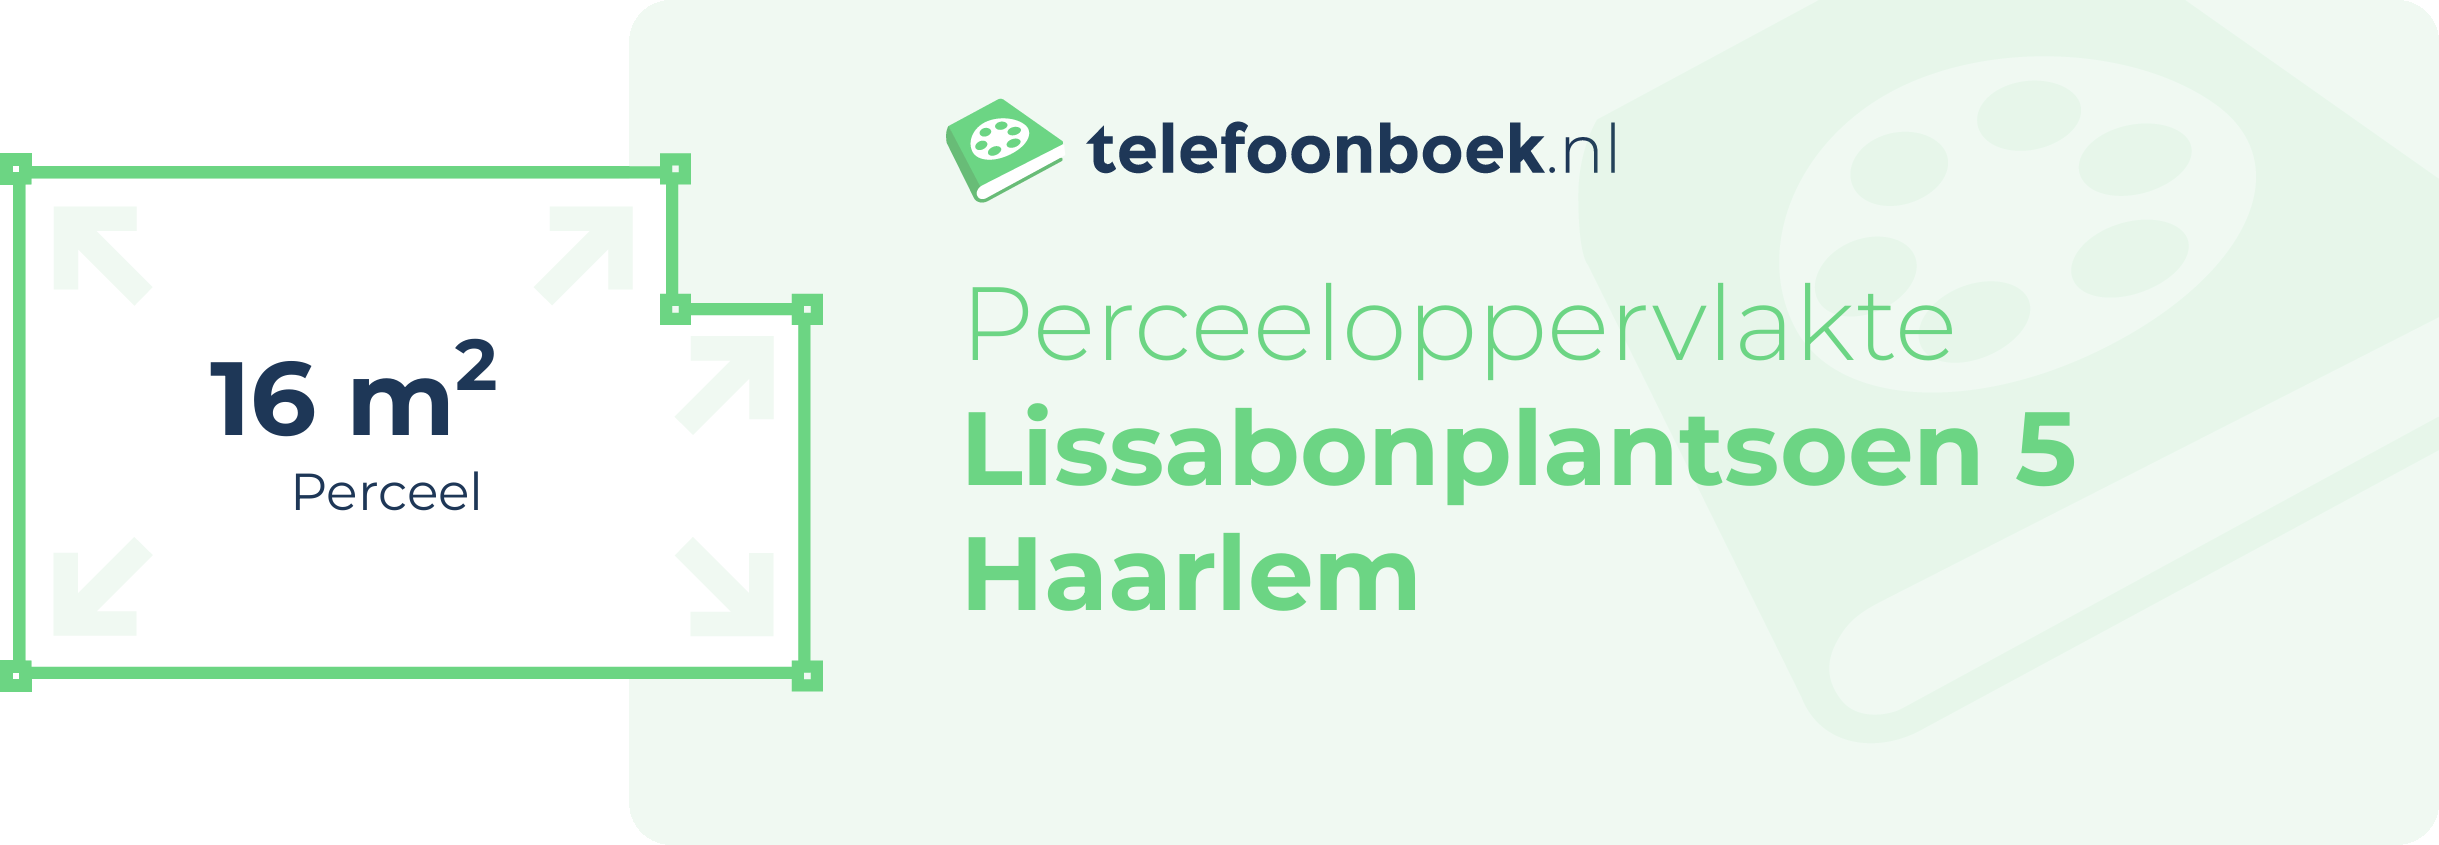 Perceeloppervlakte Lissabonplantsoen 5 Haarlem